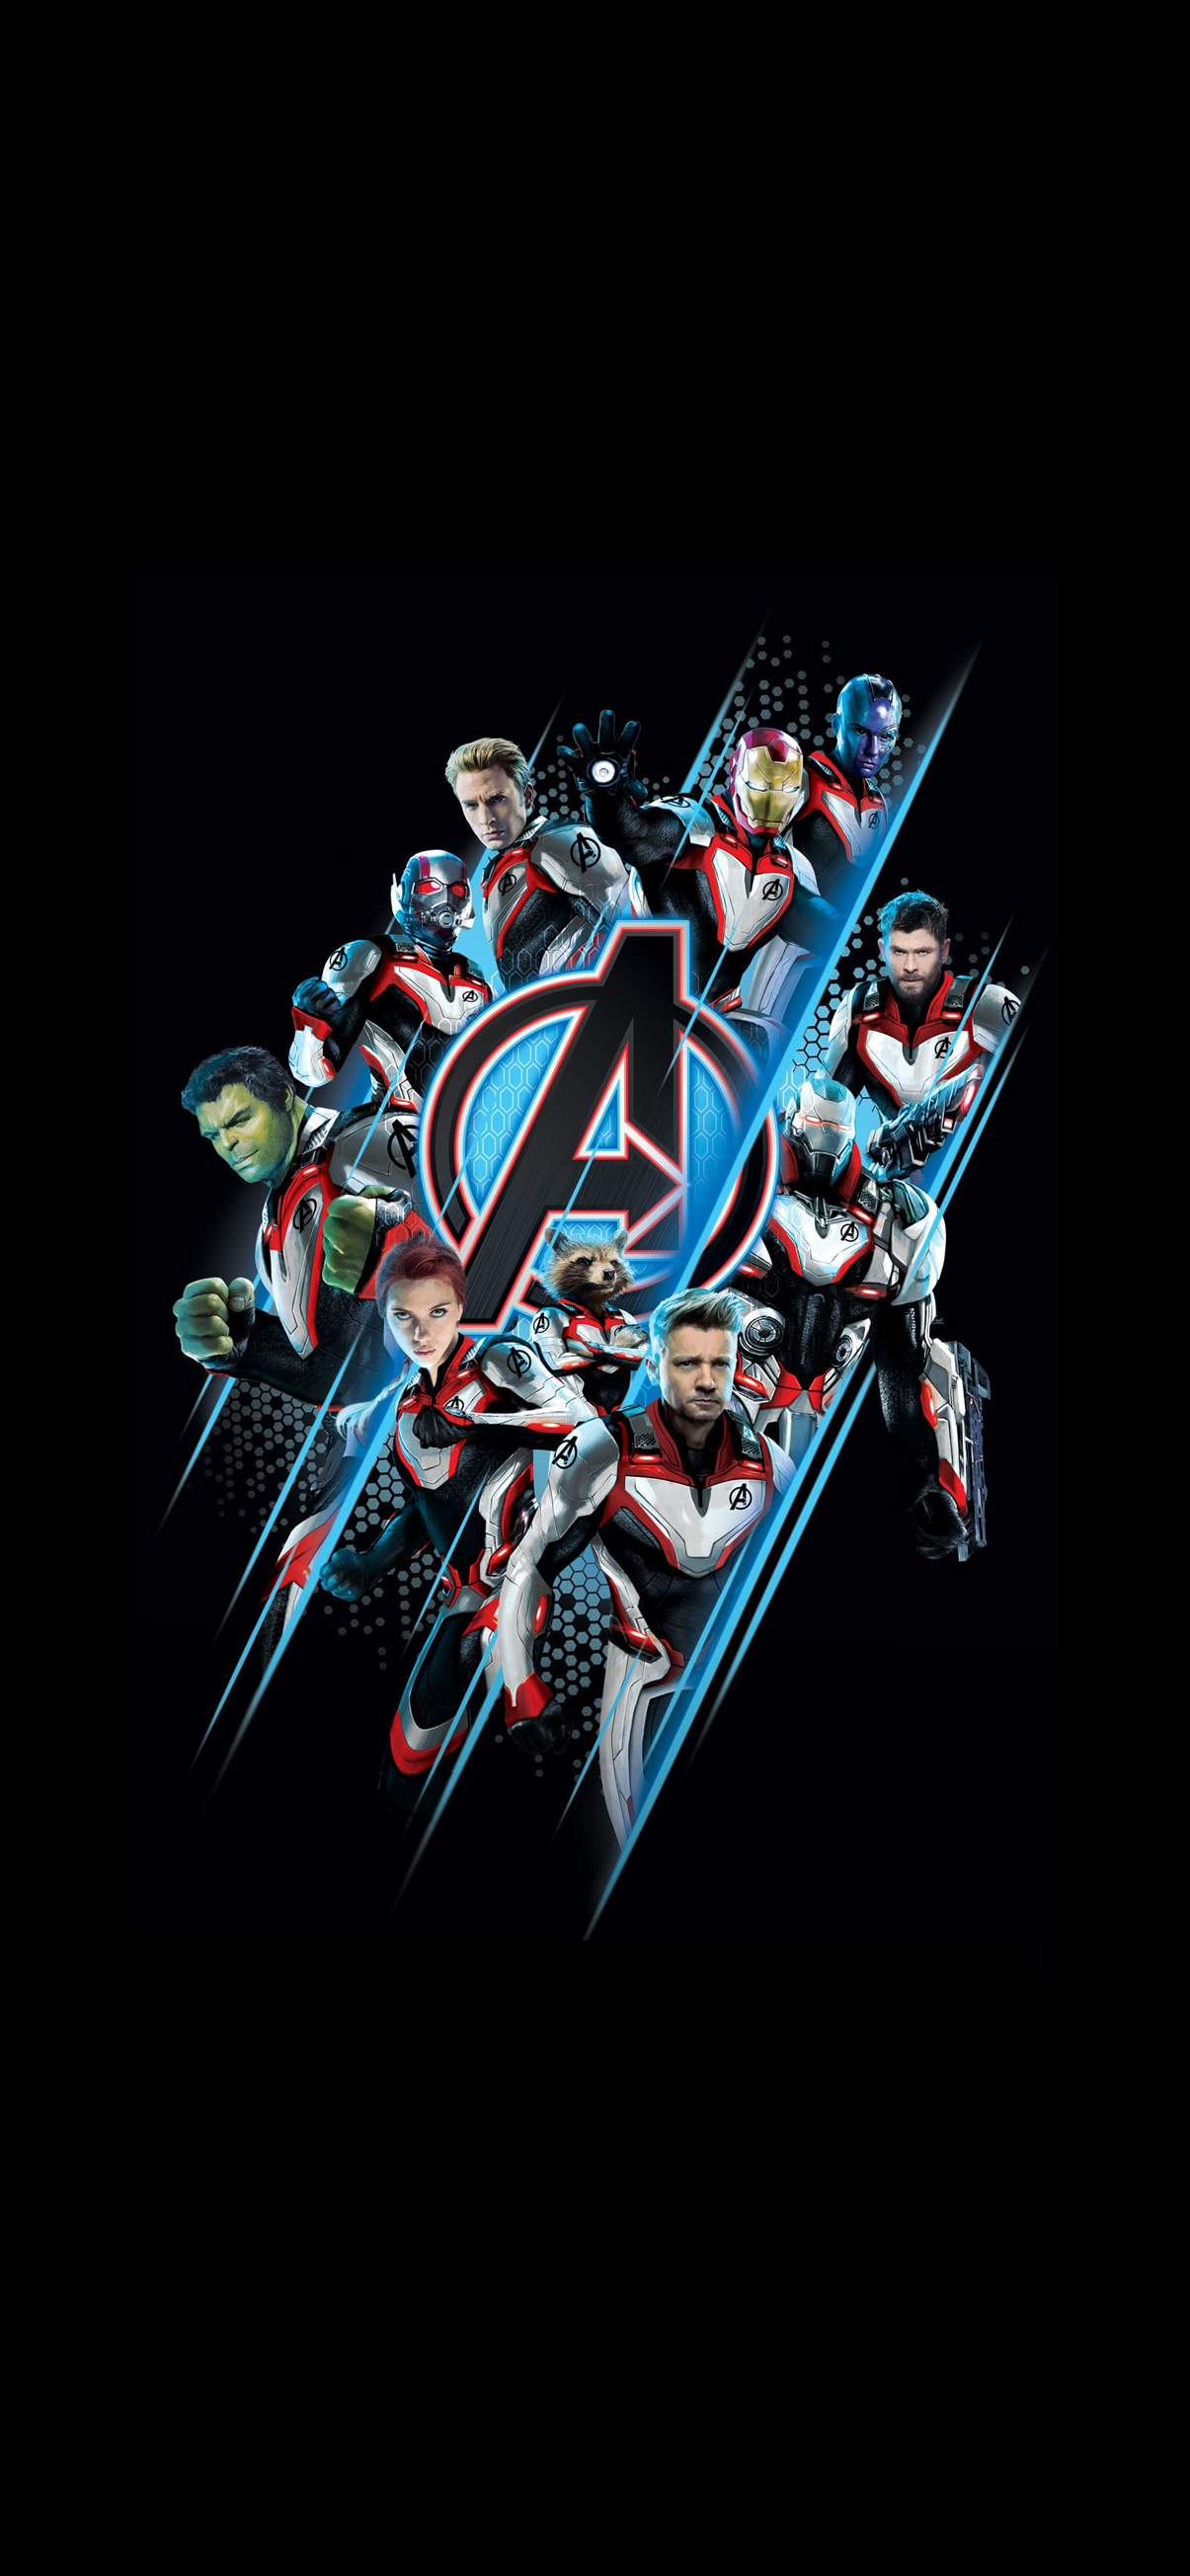 avengers wallpaper for mobile,fictional character,t shirt,superhero,graphic design,poster